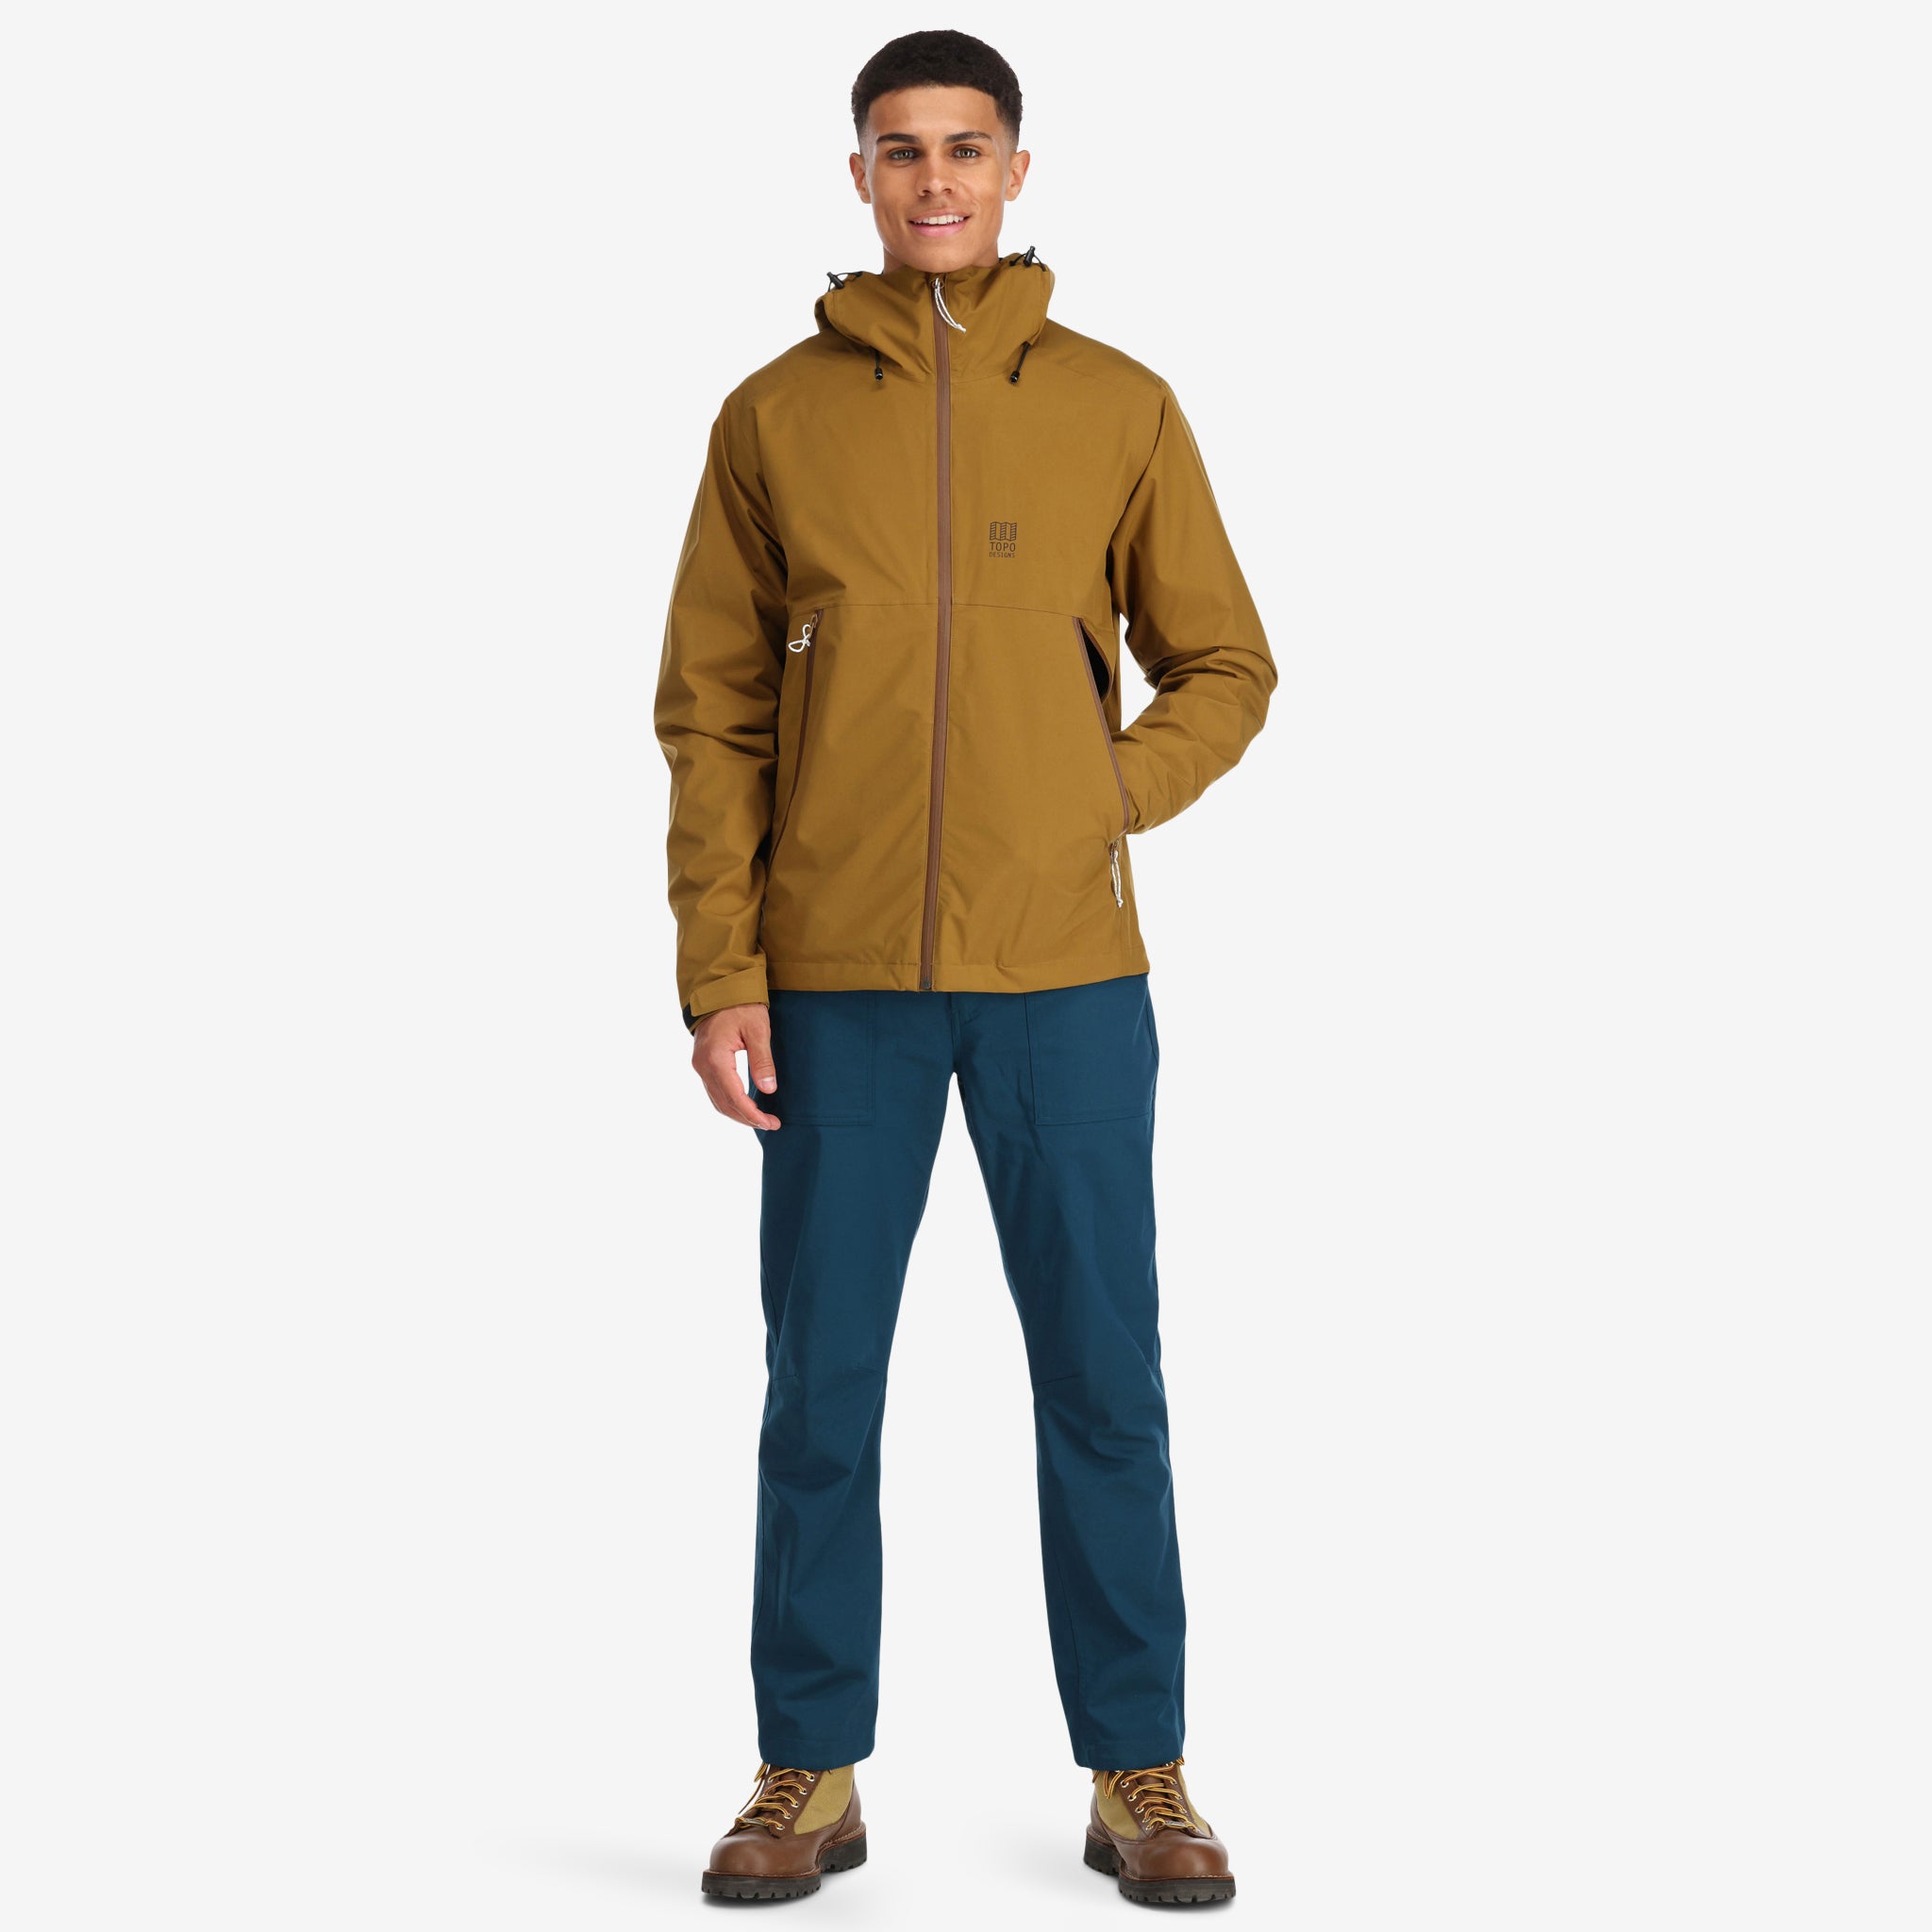 Coach Outlet Signature Denim Hooded Zip Up Jacket - Men's Jackets - blue, Size: 2X-Large